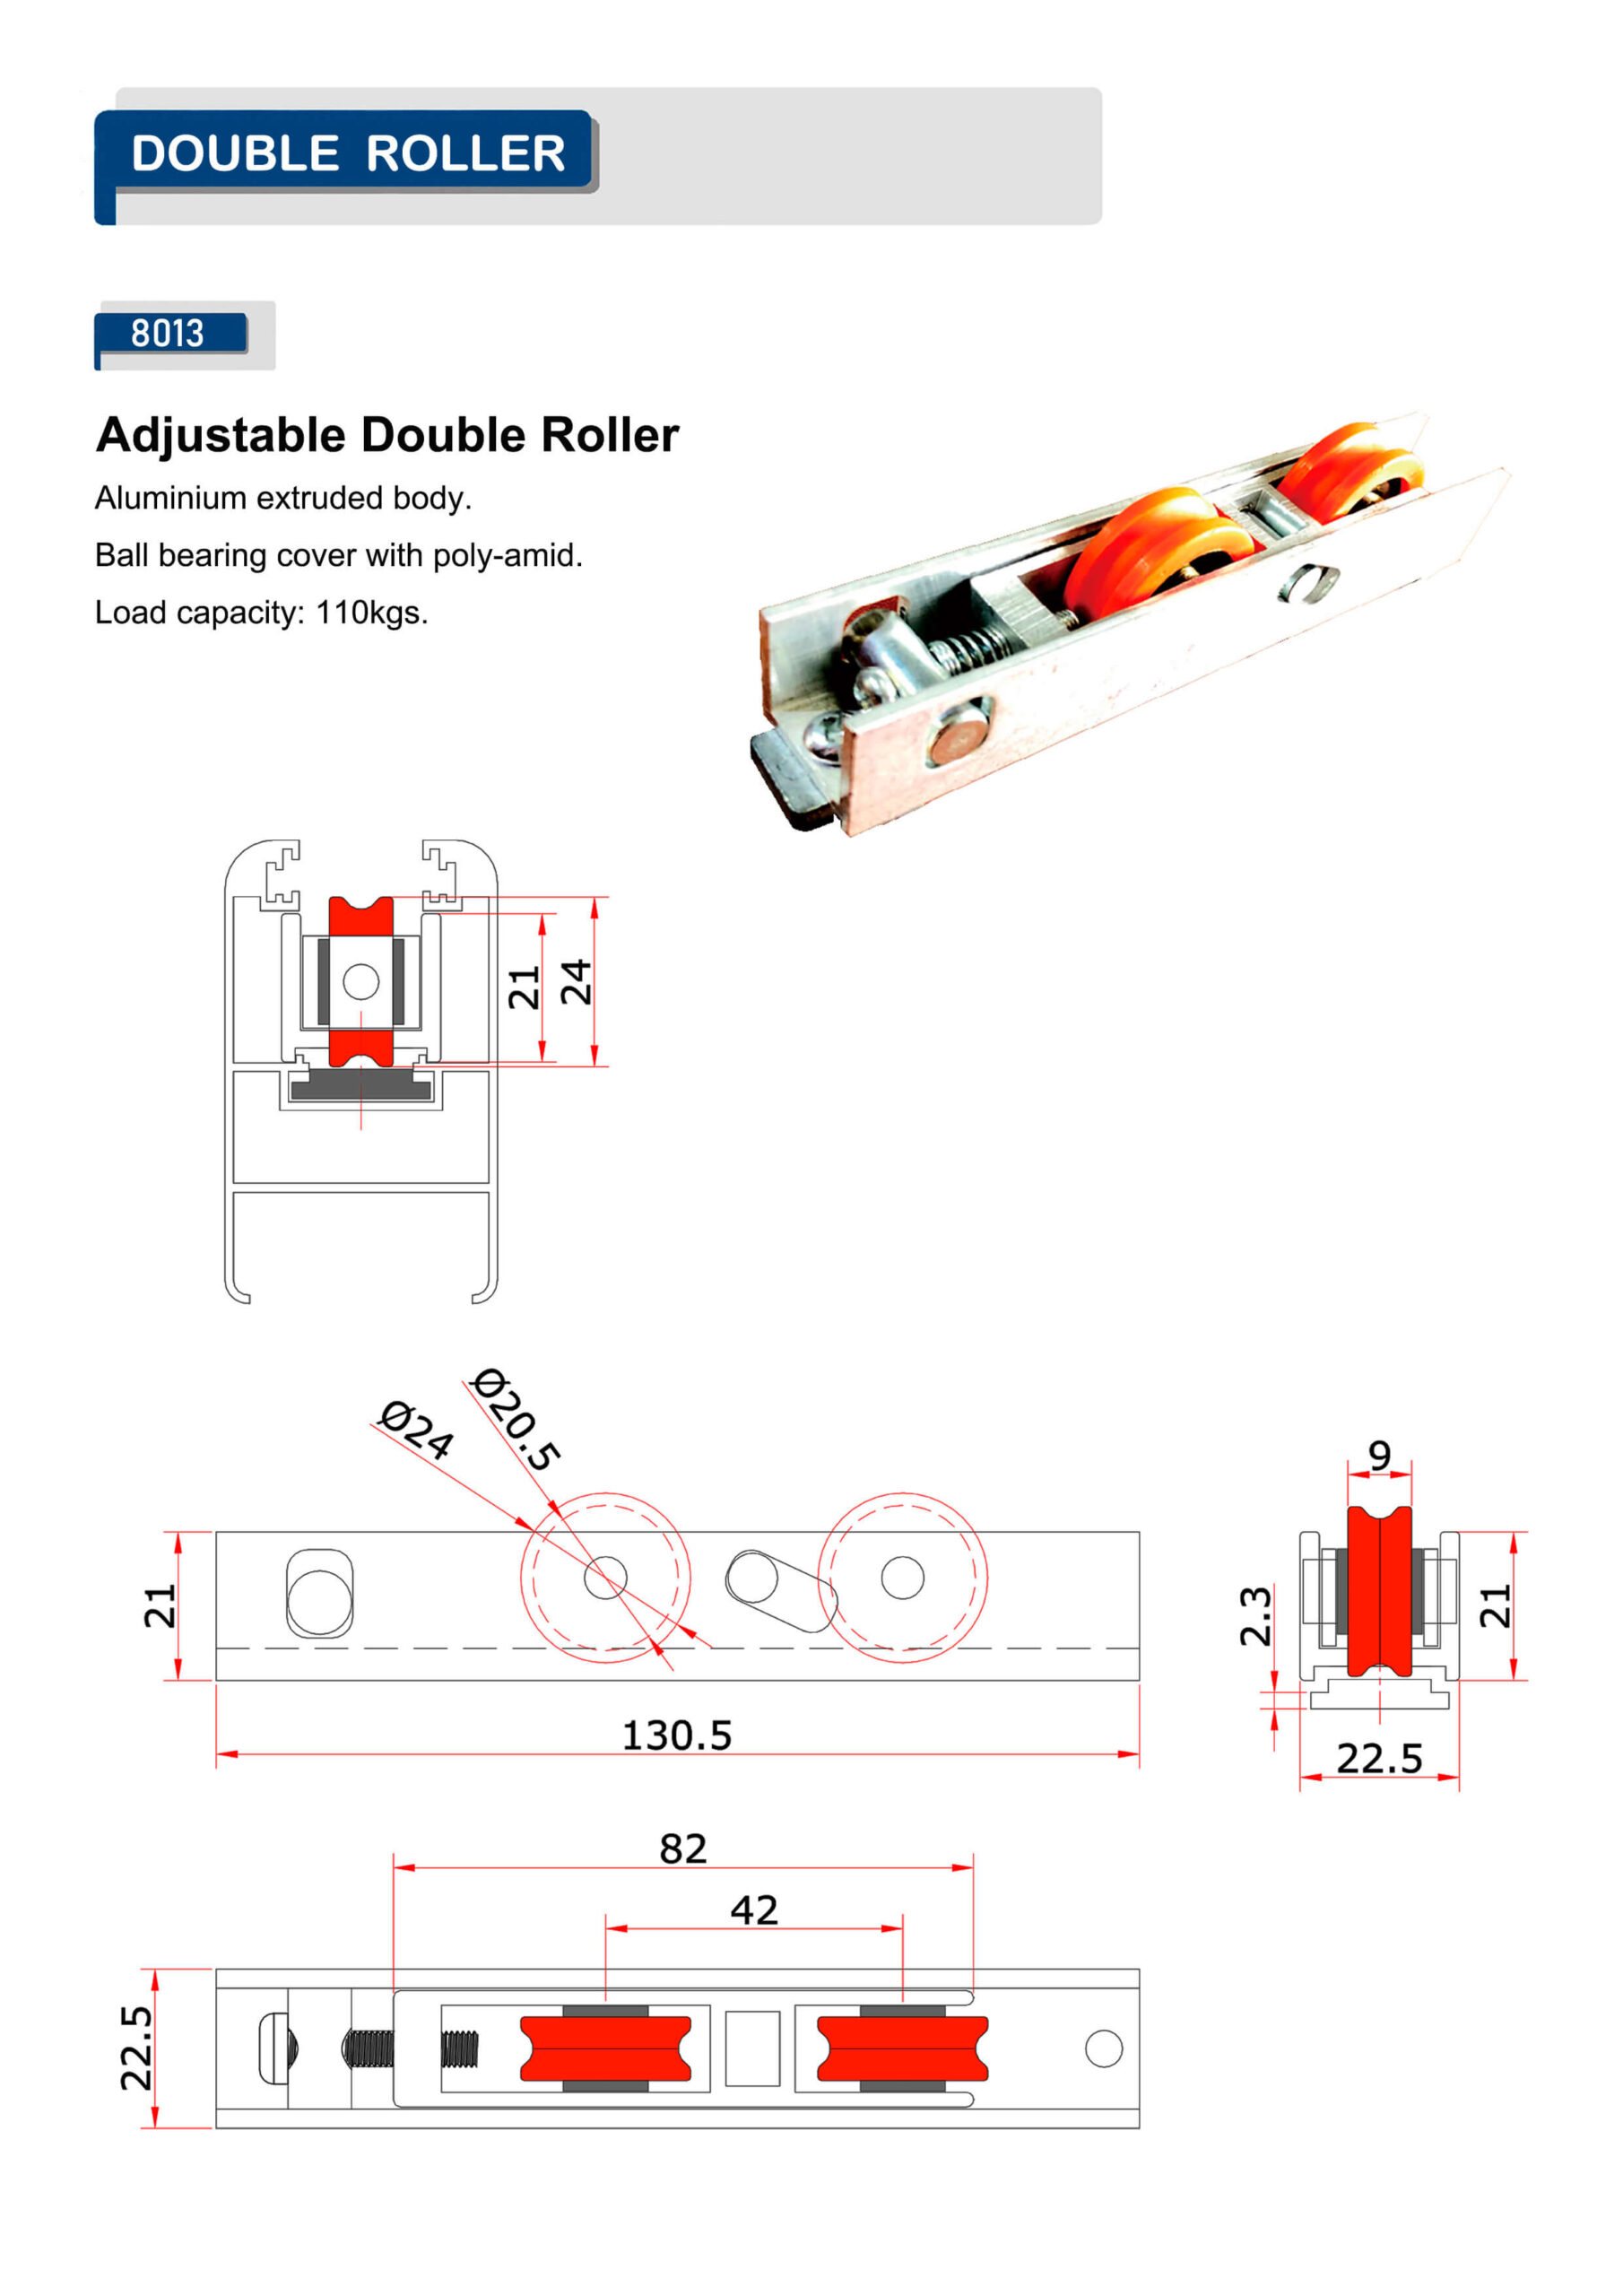 Adjustable Double Roller